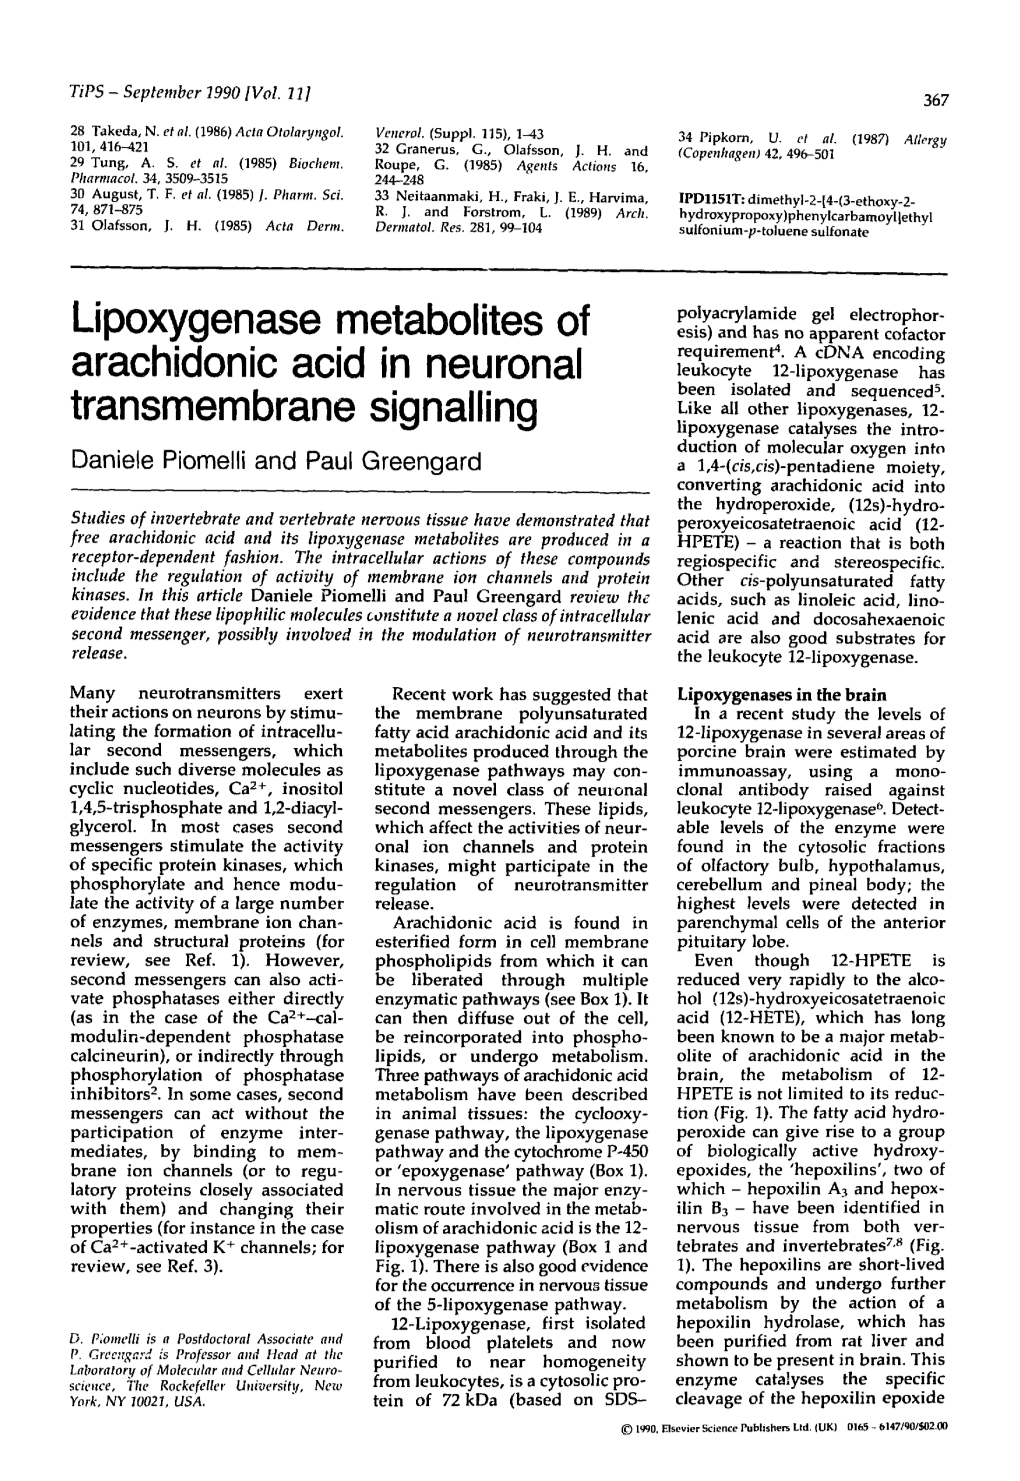 Lipoxygenase Metabolites of Arachidonic Acid in Neuronal